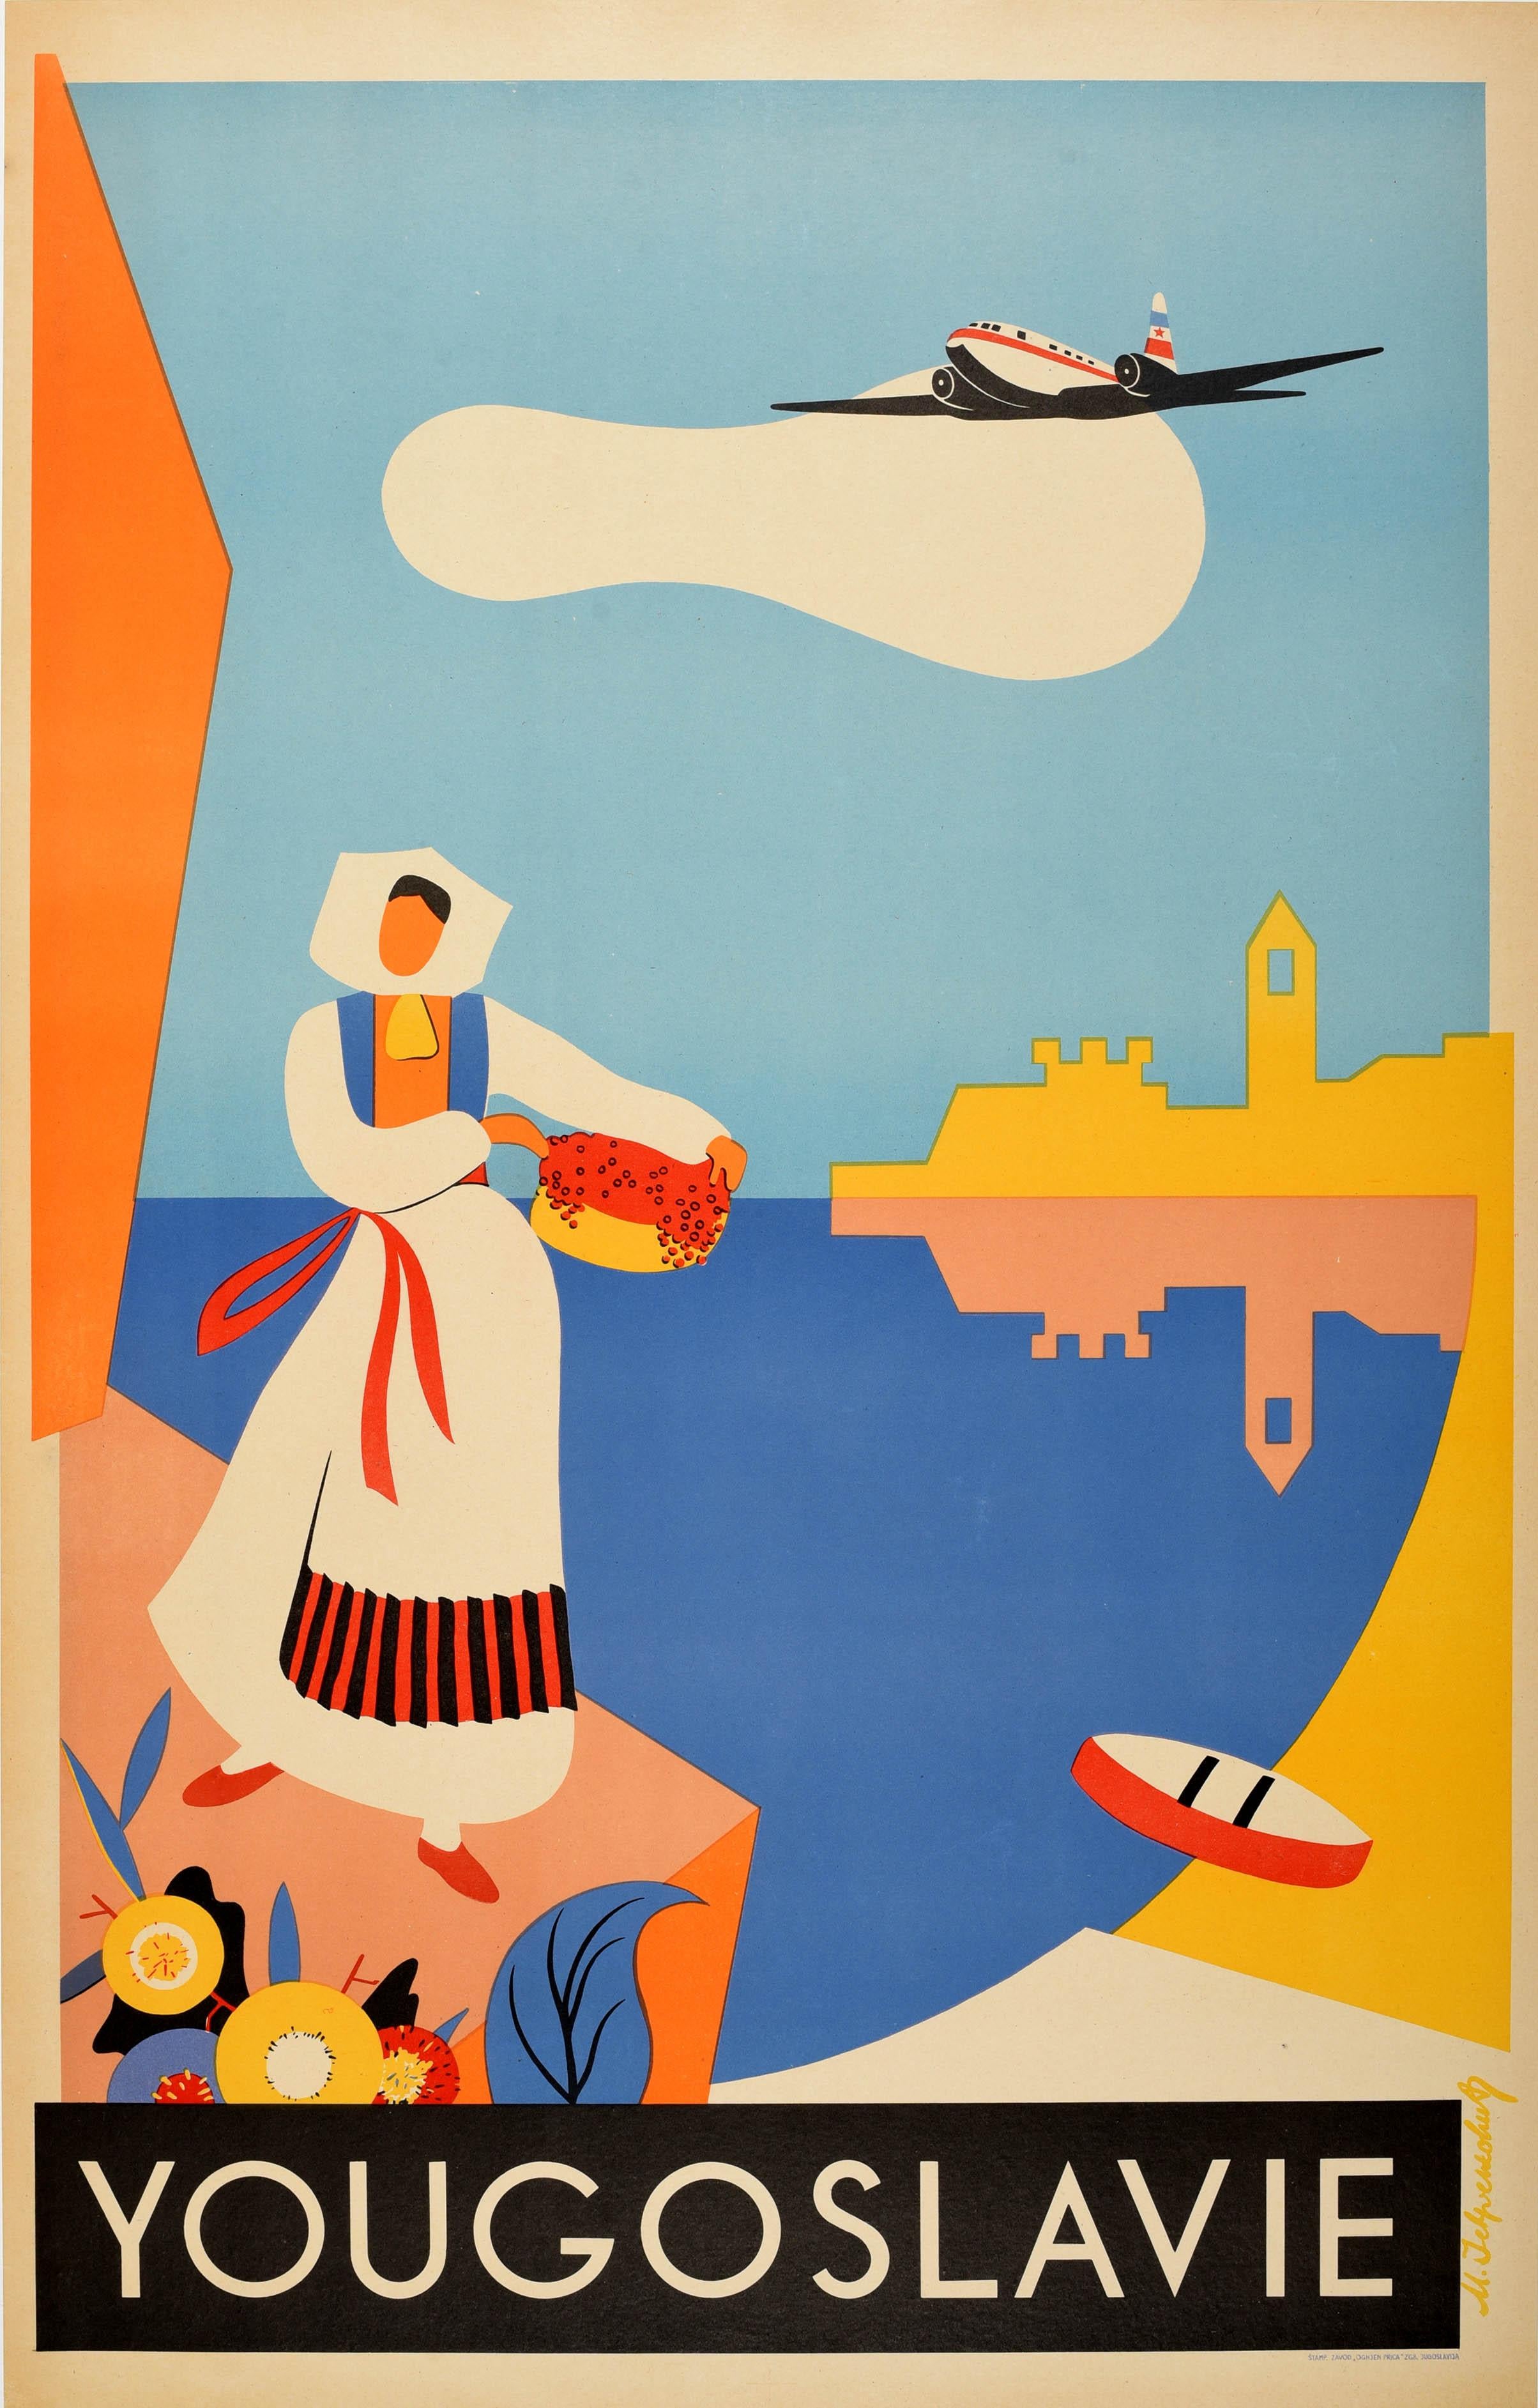 Jekpencho Print - Original Vintage Poster Yougoslavie Yugoslavia Travel Plane Sea Flowers Design